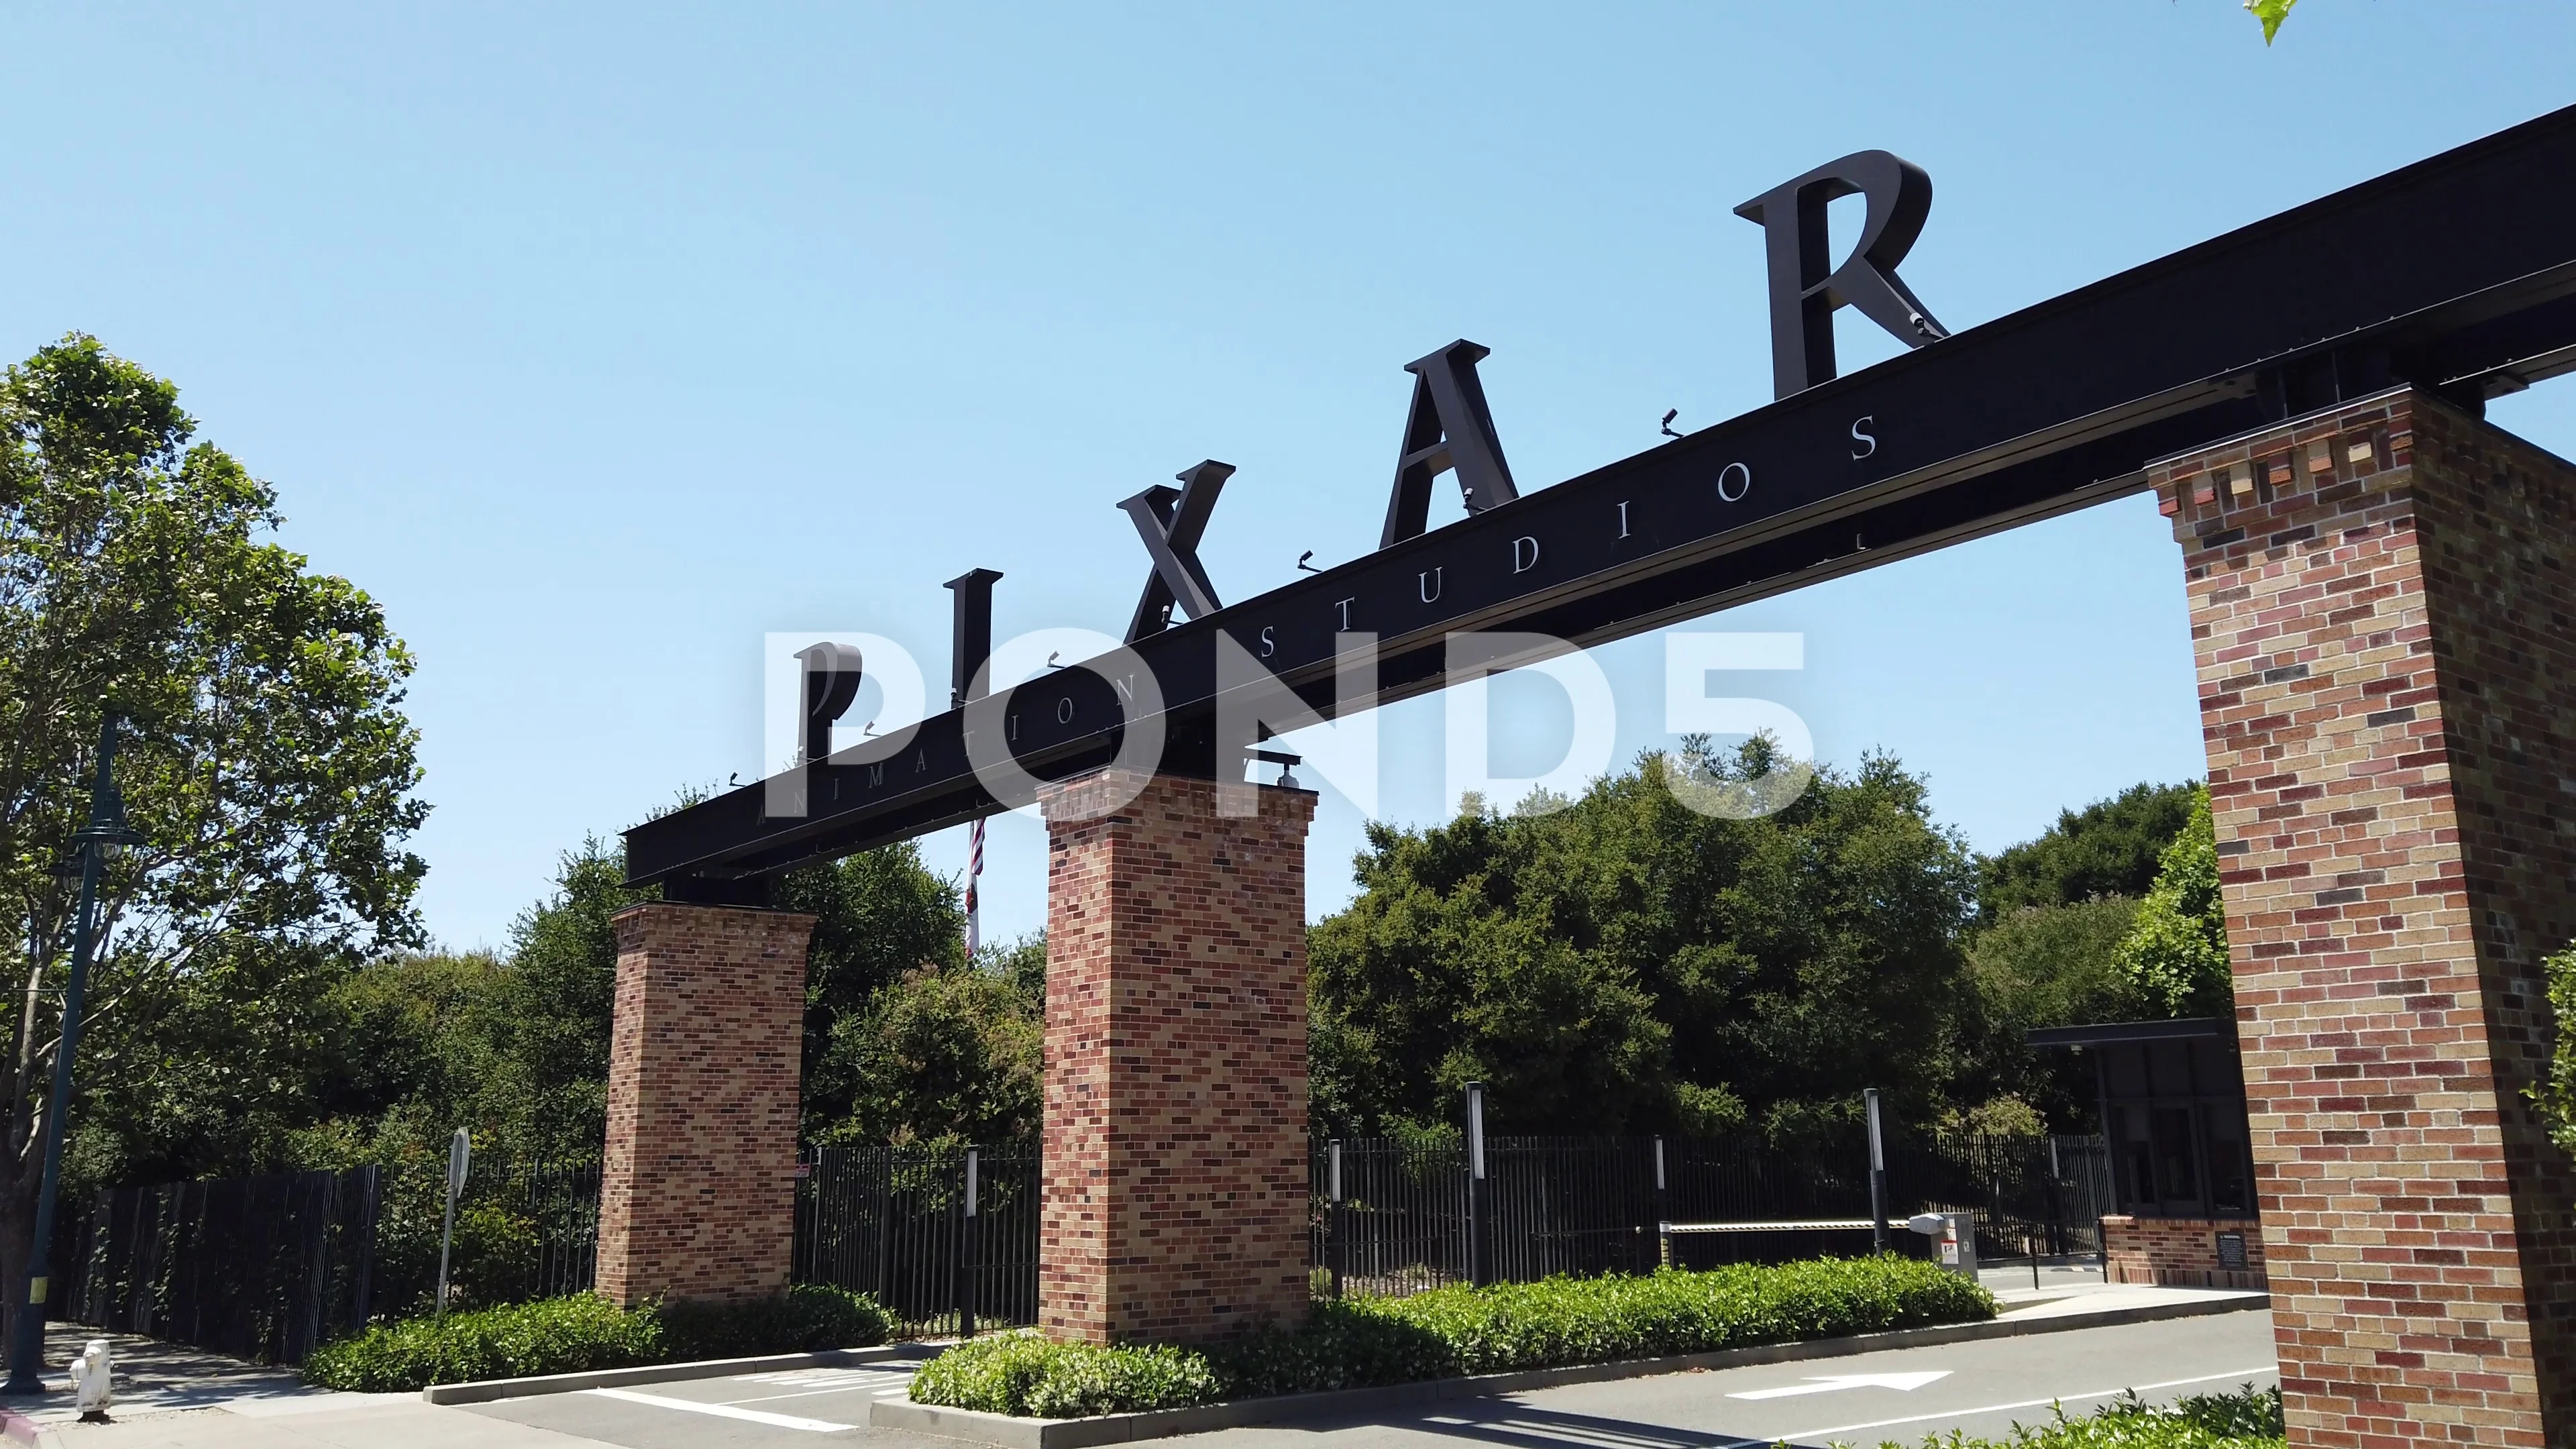 Pixar animation studios campus entrance ... | Stock Video | Pond5